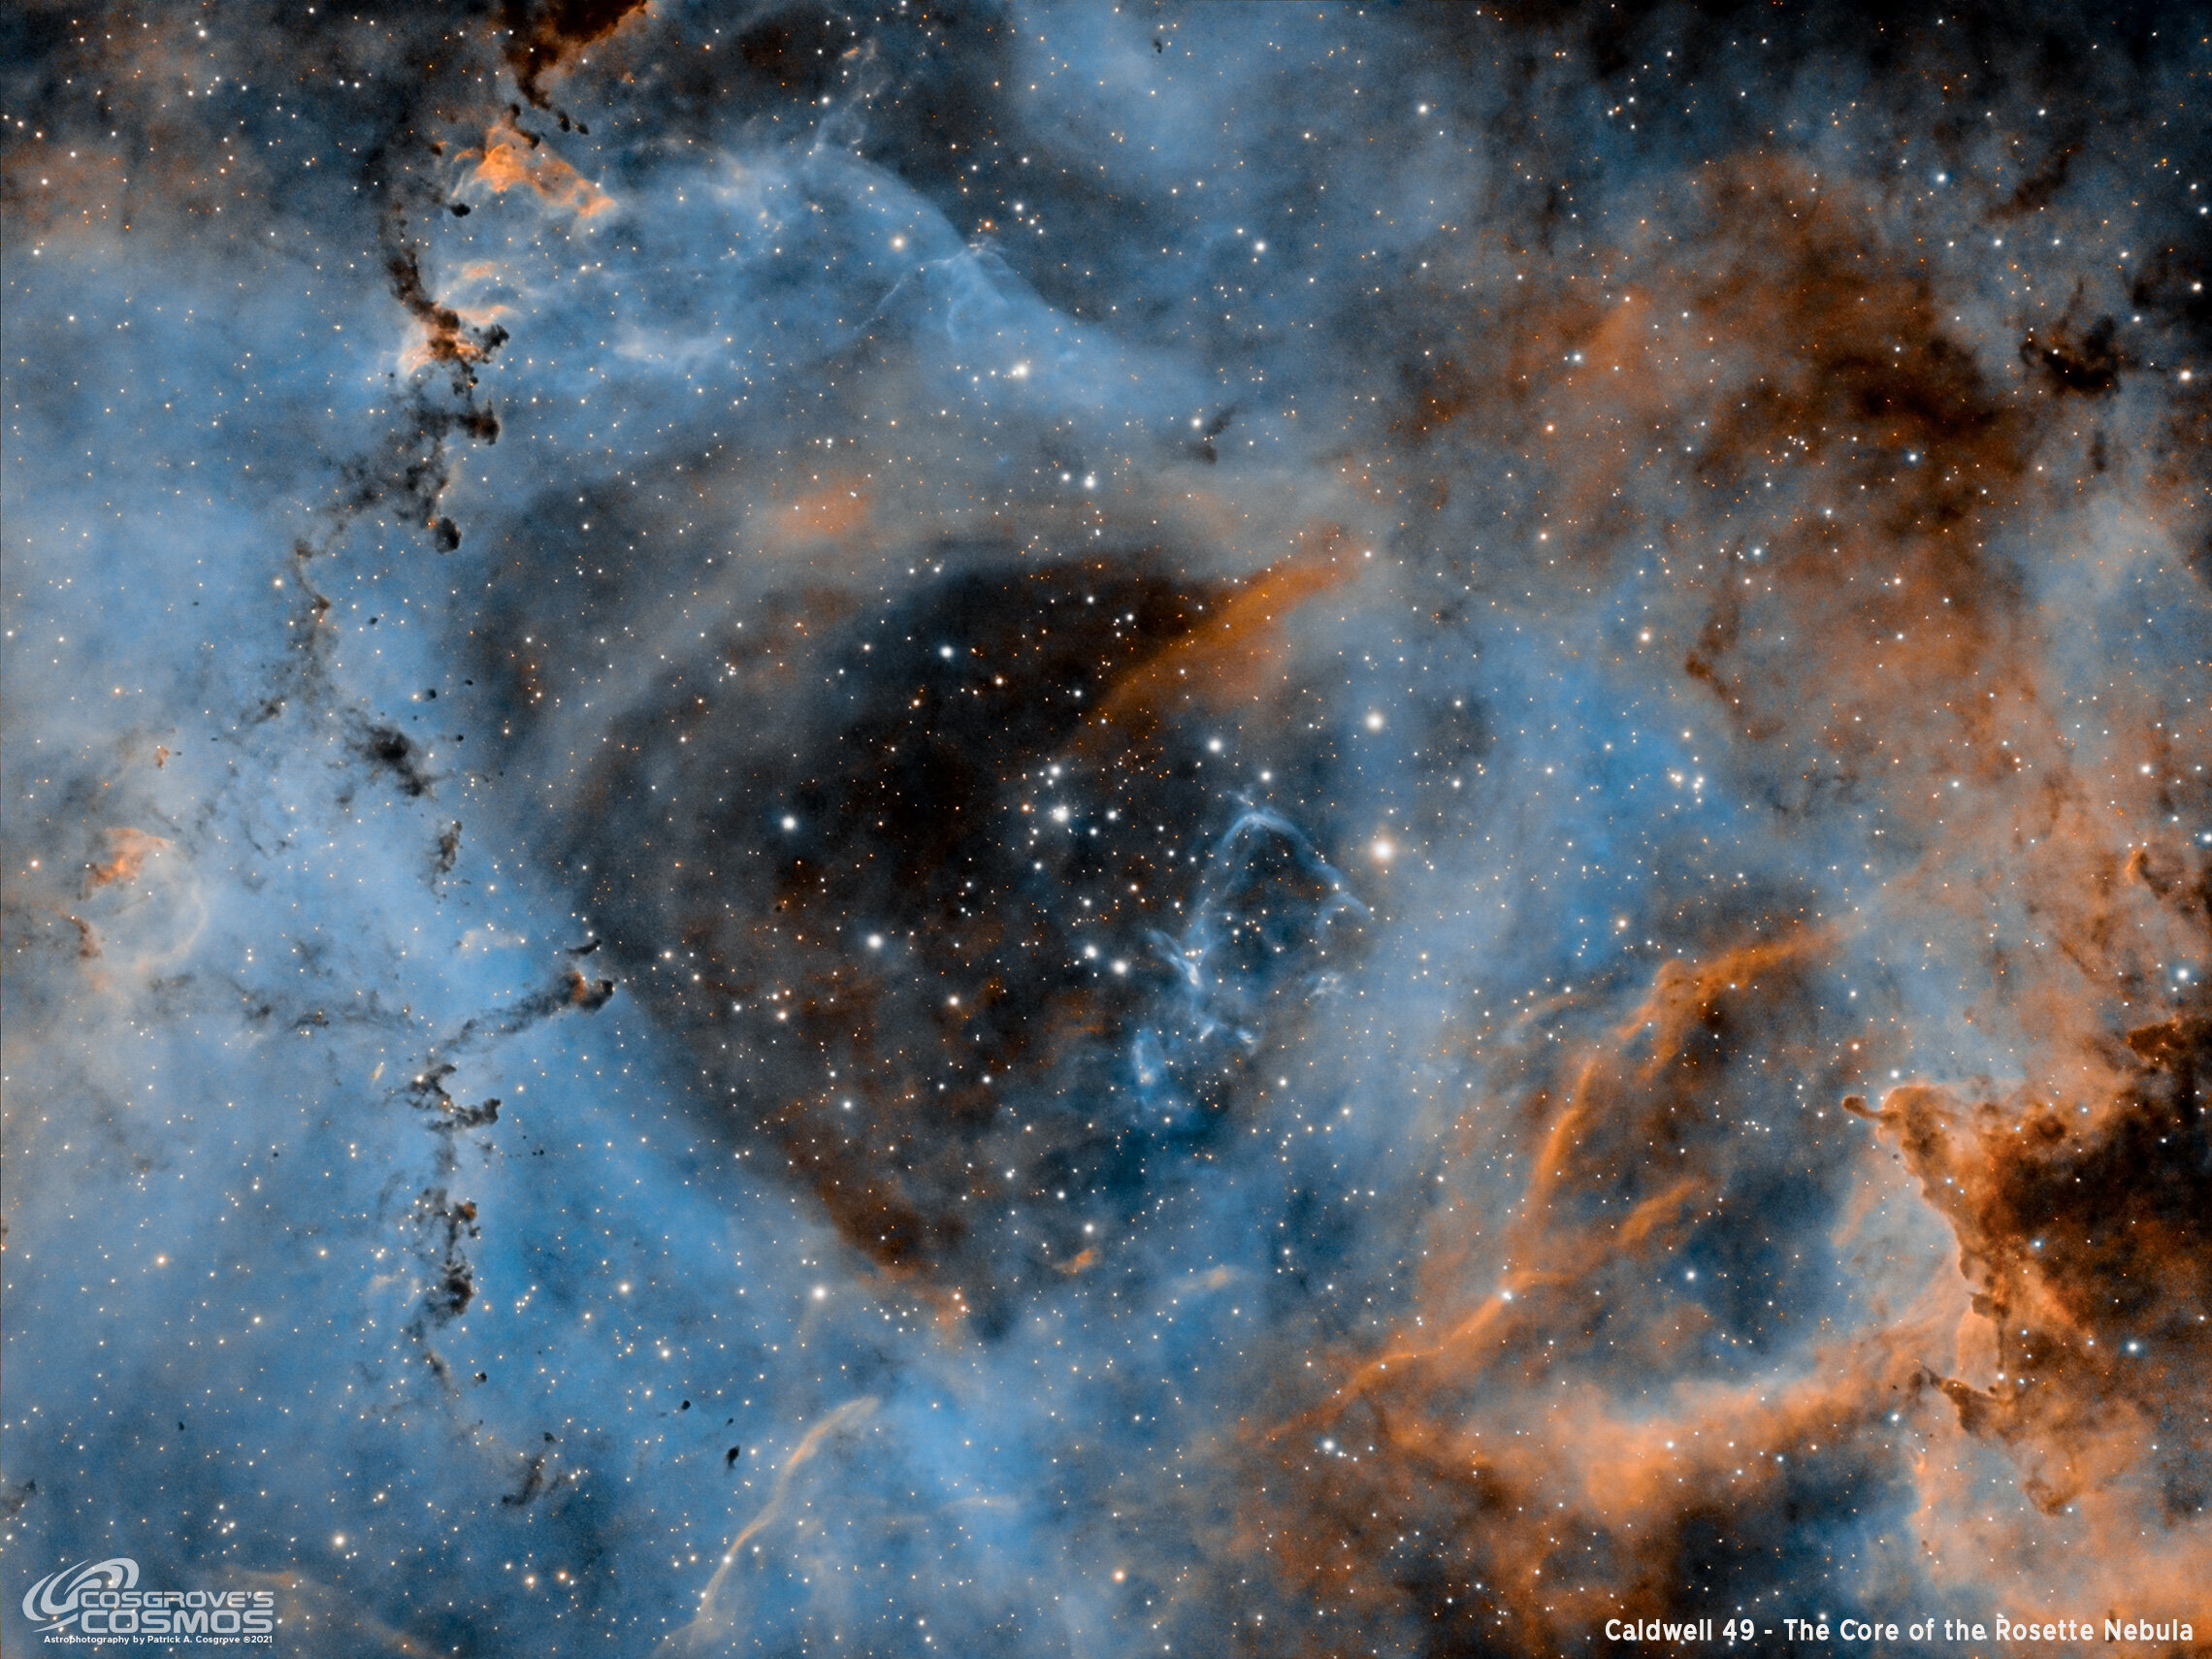 The Rosette Nebula (C49) in image